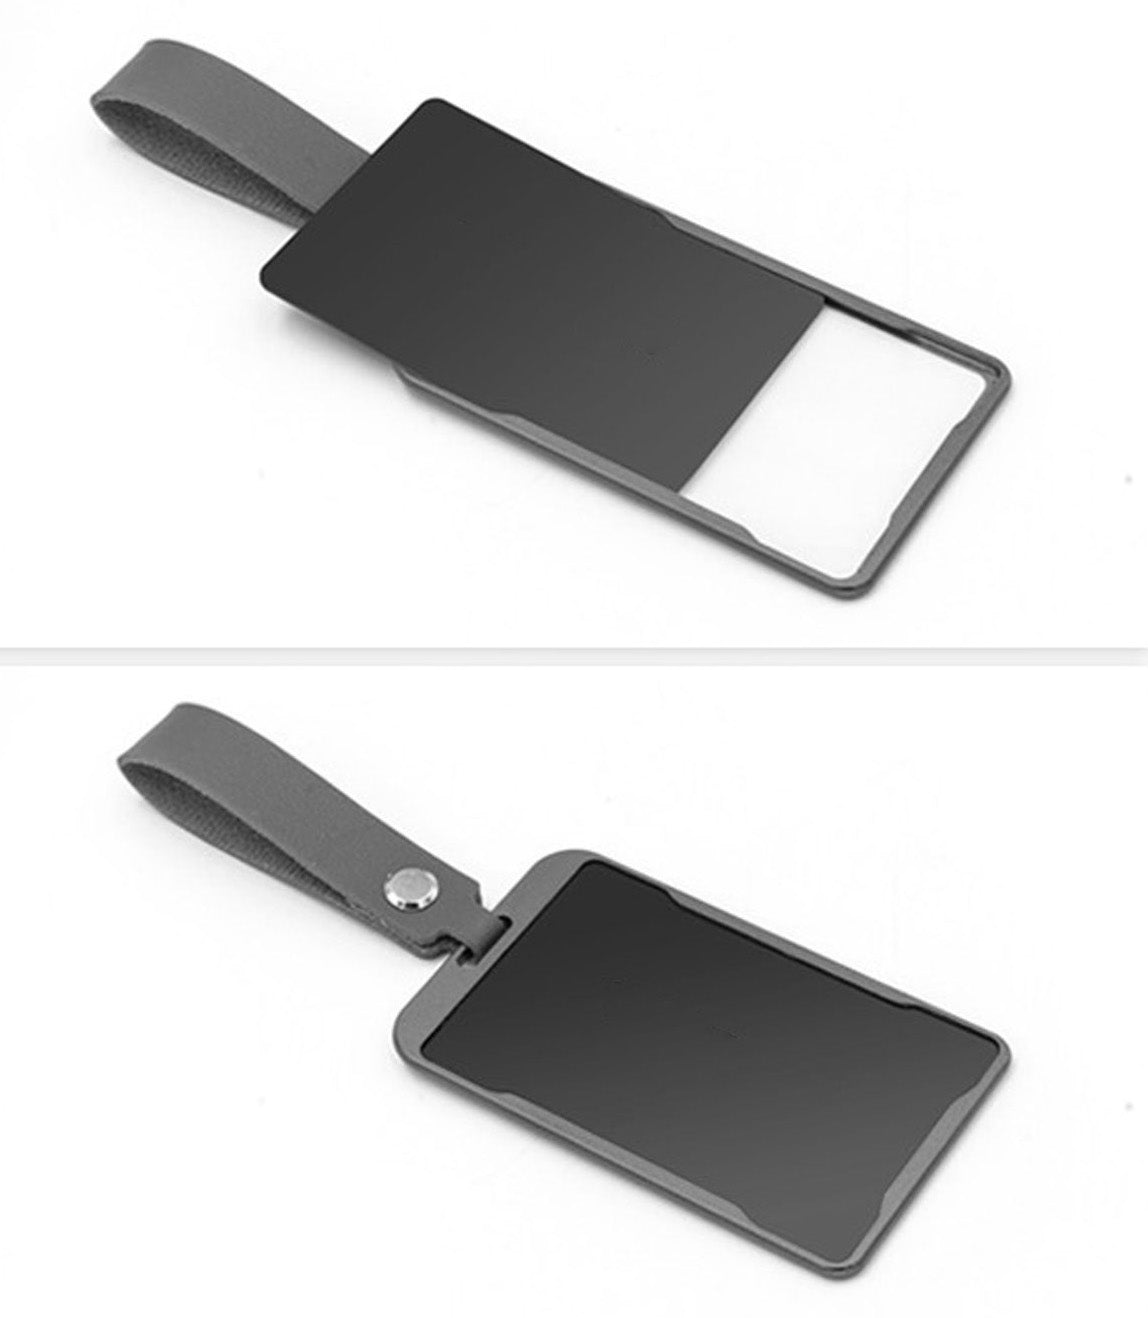 Black Aluminum Alloy Protective Car Card Key Cover For All Tesla Models